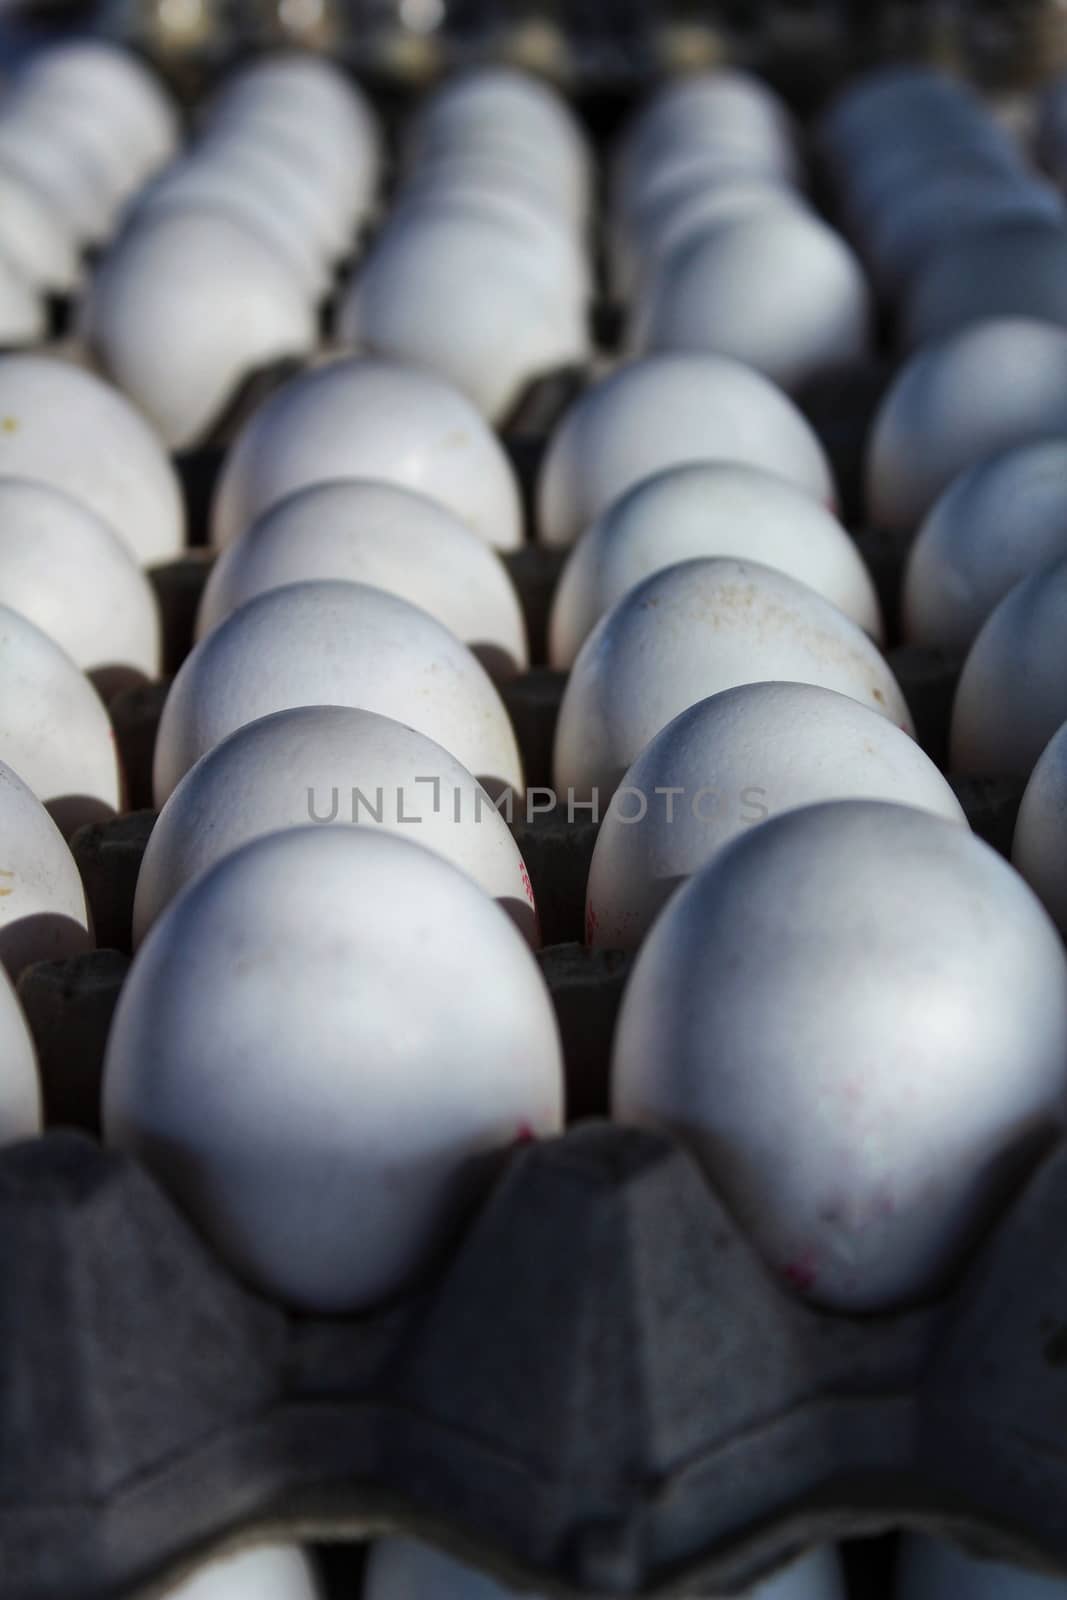 White fresh eggs at a market stall by soniabonet